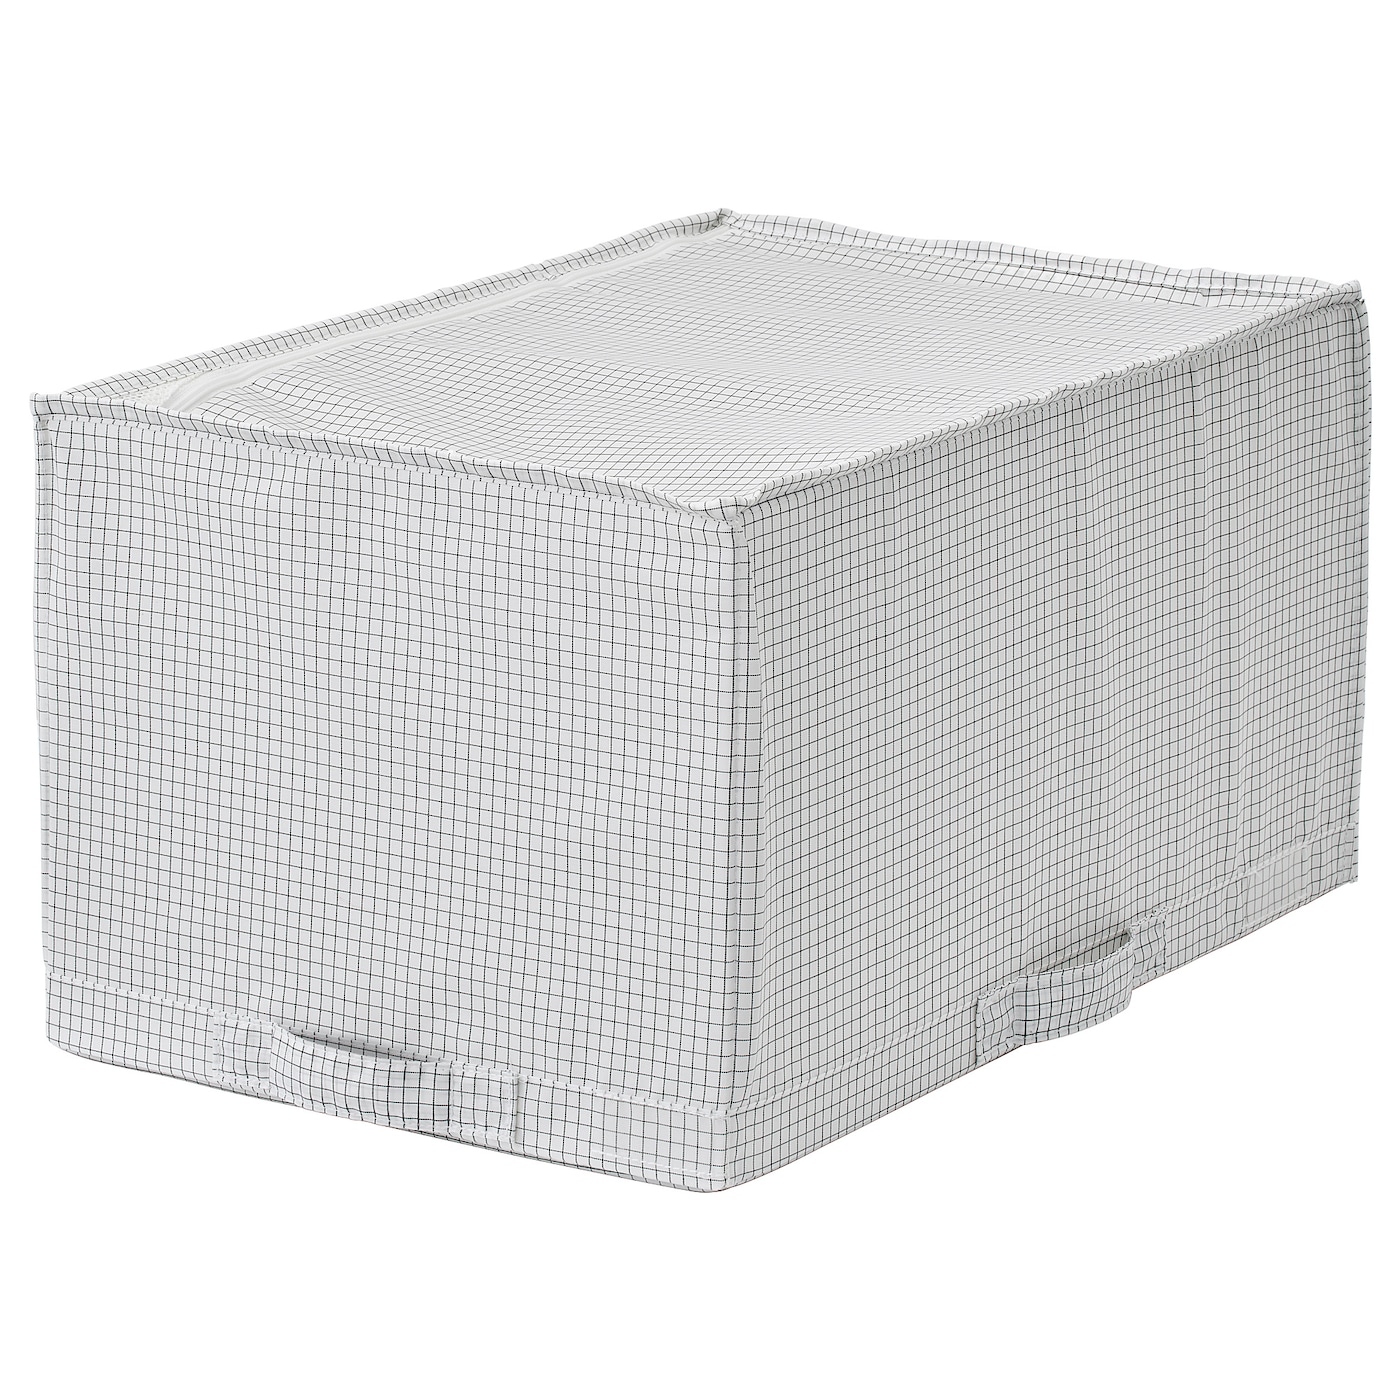 STUK СТУК Сумка для хранения, белый/серый, 34x51x28 см IKEA stuk стук органайзер белый 26x20x6 см ikea